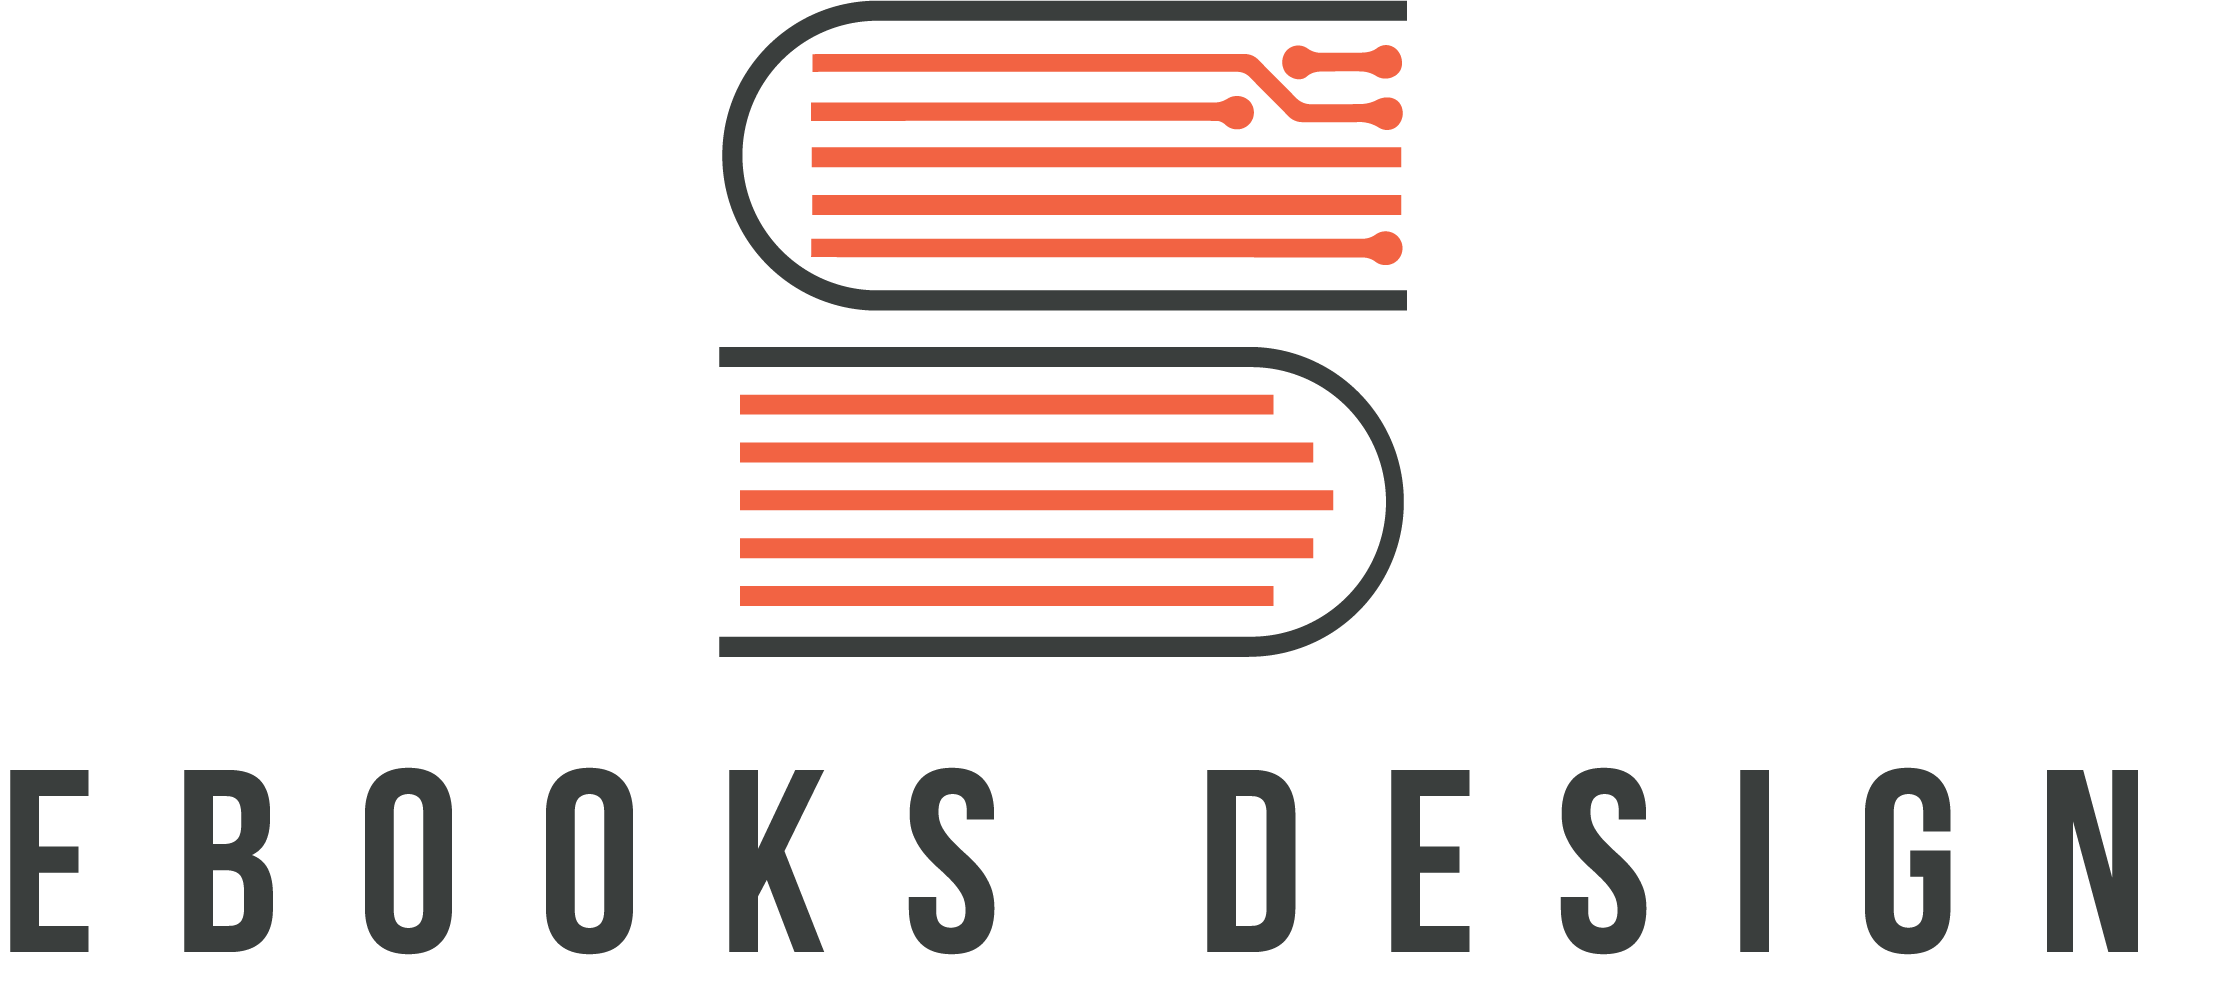 EBooks Design Logo